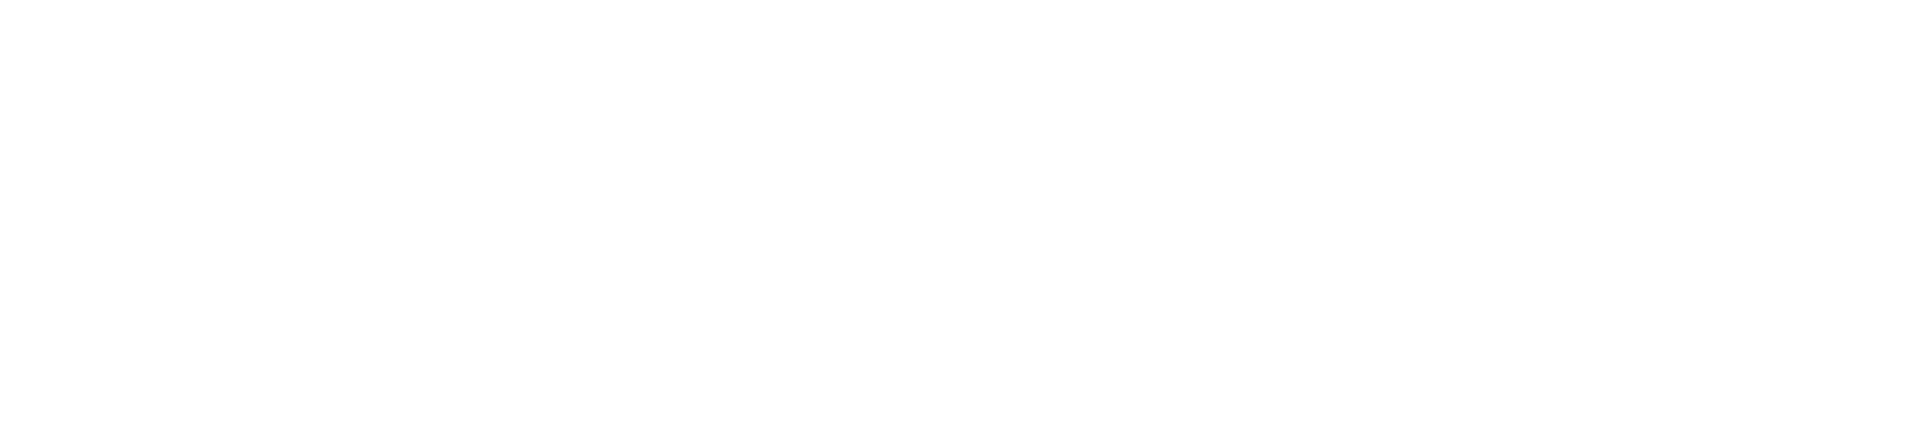 LBTV logo